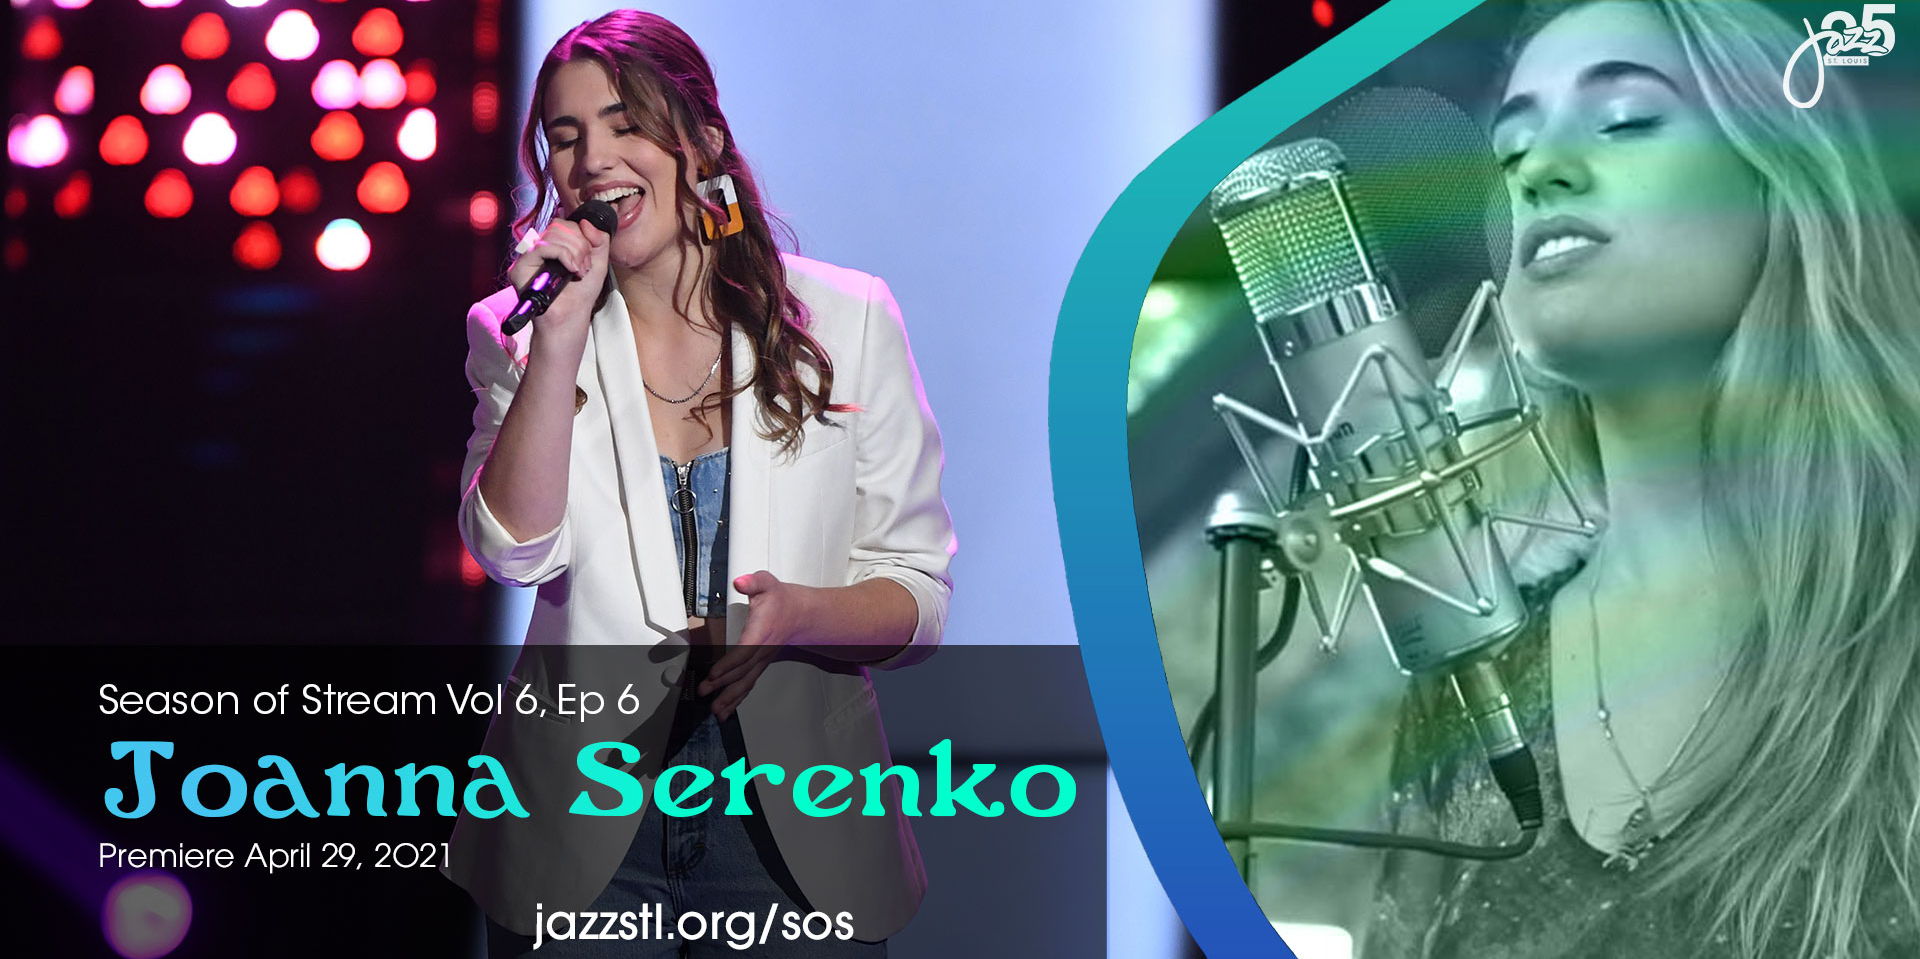 Season of Stream Vol 6, Ep 6 | Joanna Serenko promotional image